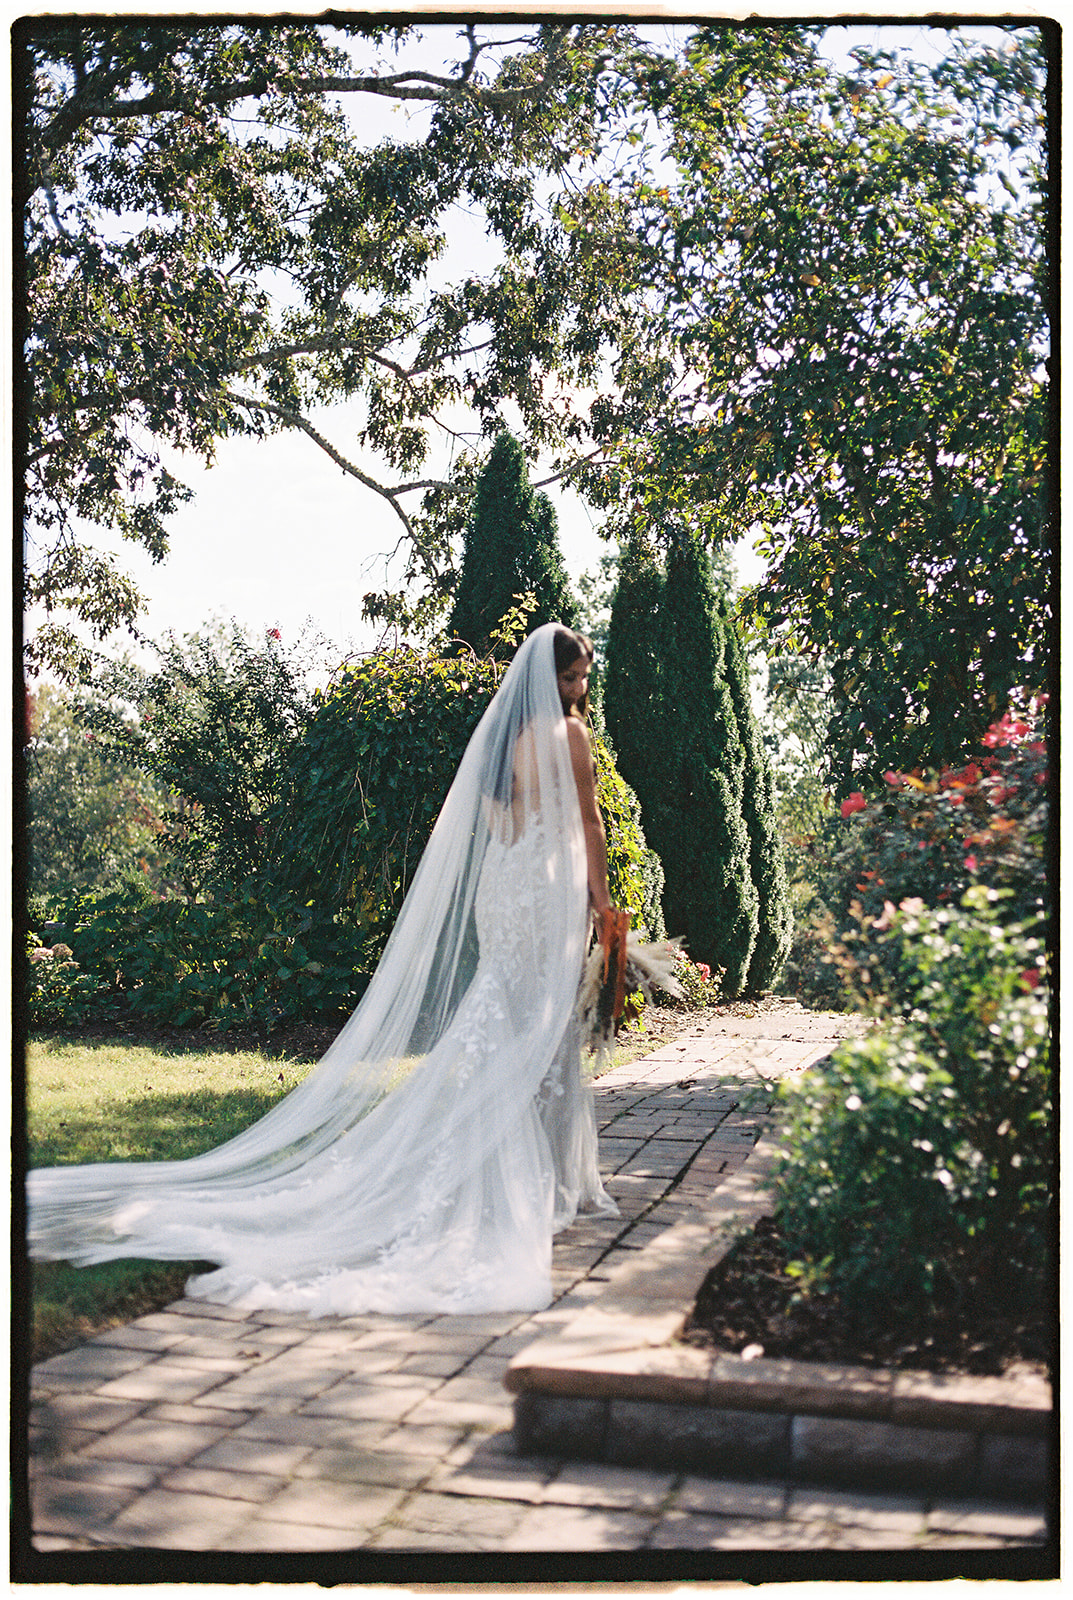 A bride walks down a garden brick sidewalk in a film photo taken by a Hybrid Wedding Photography